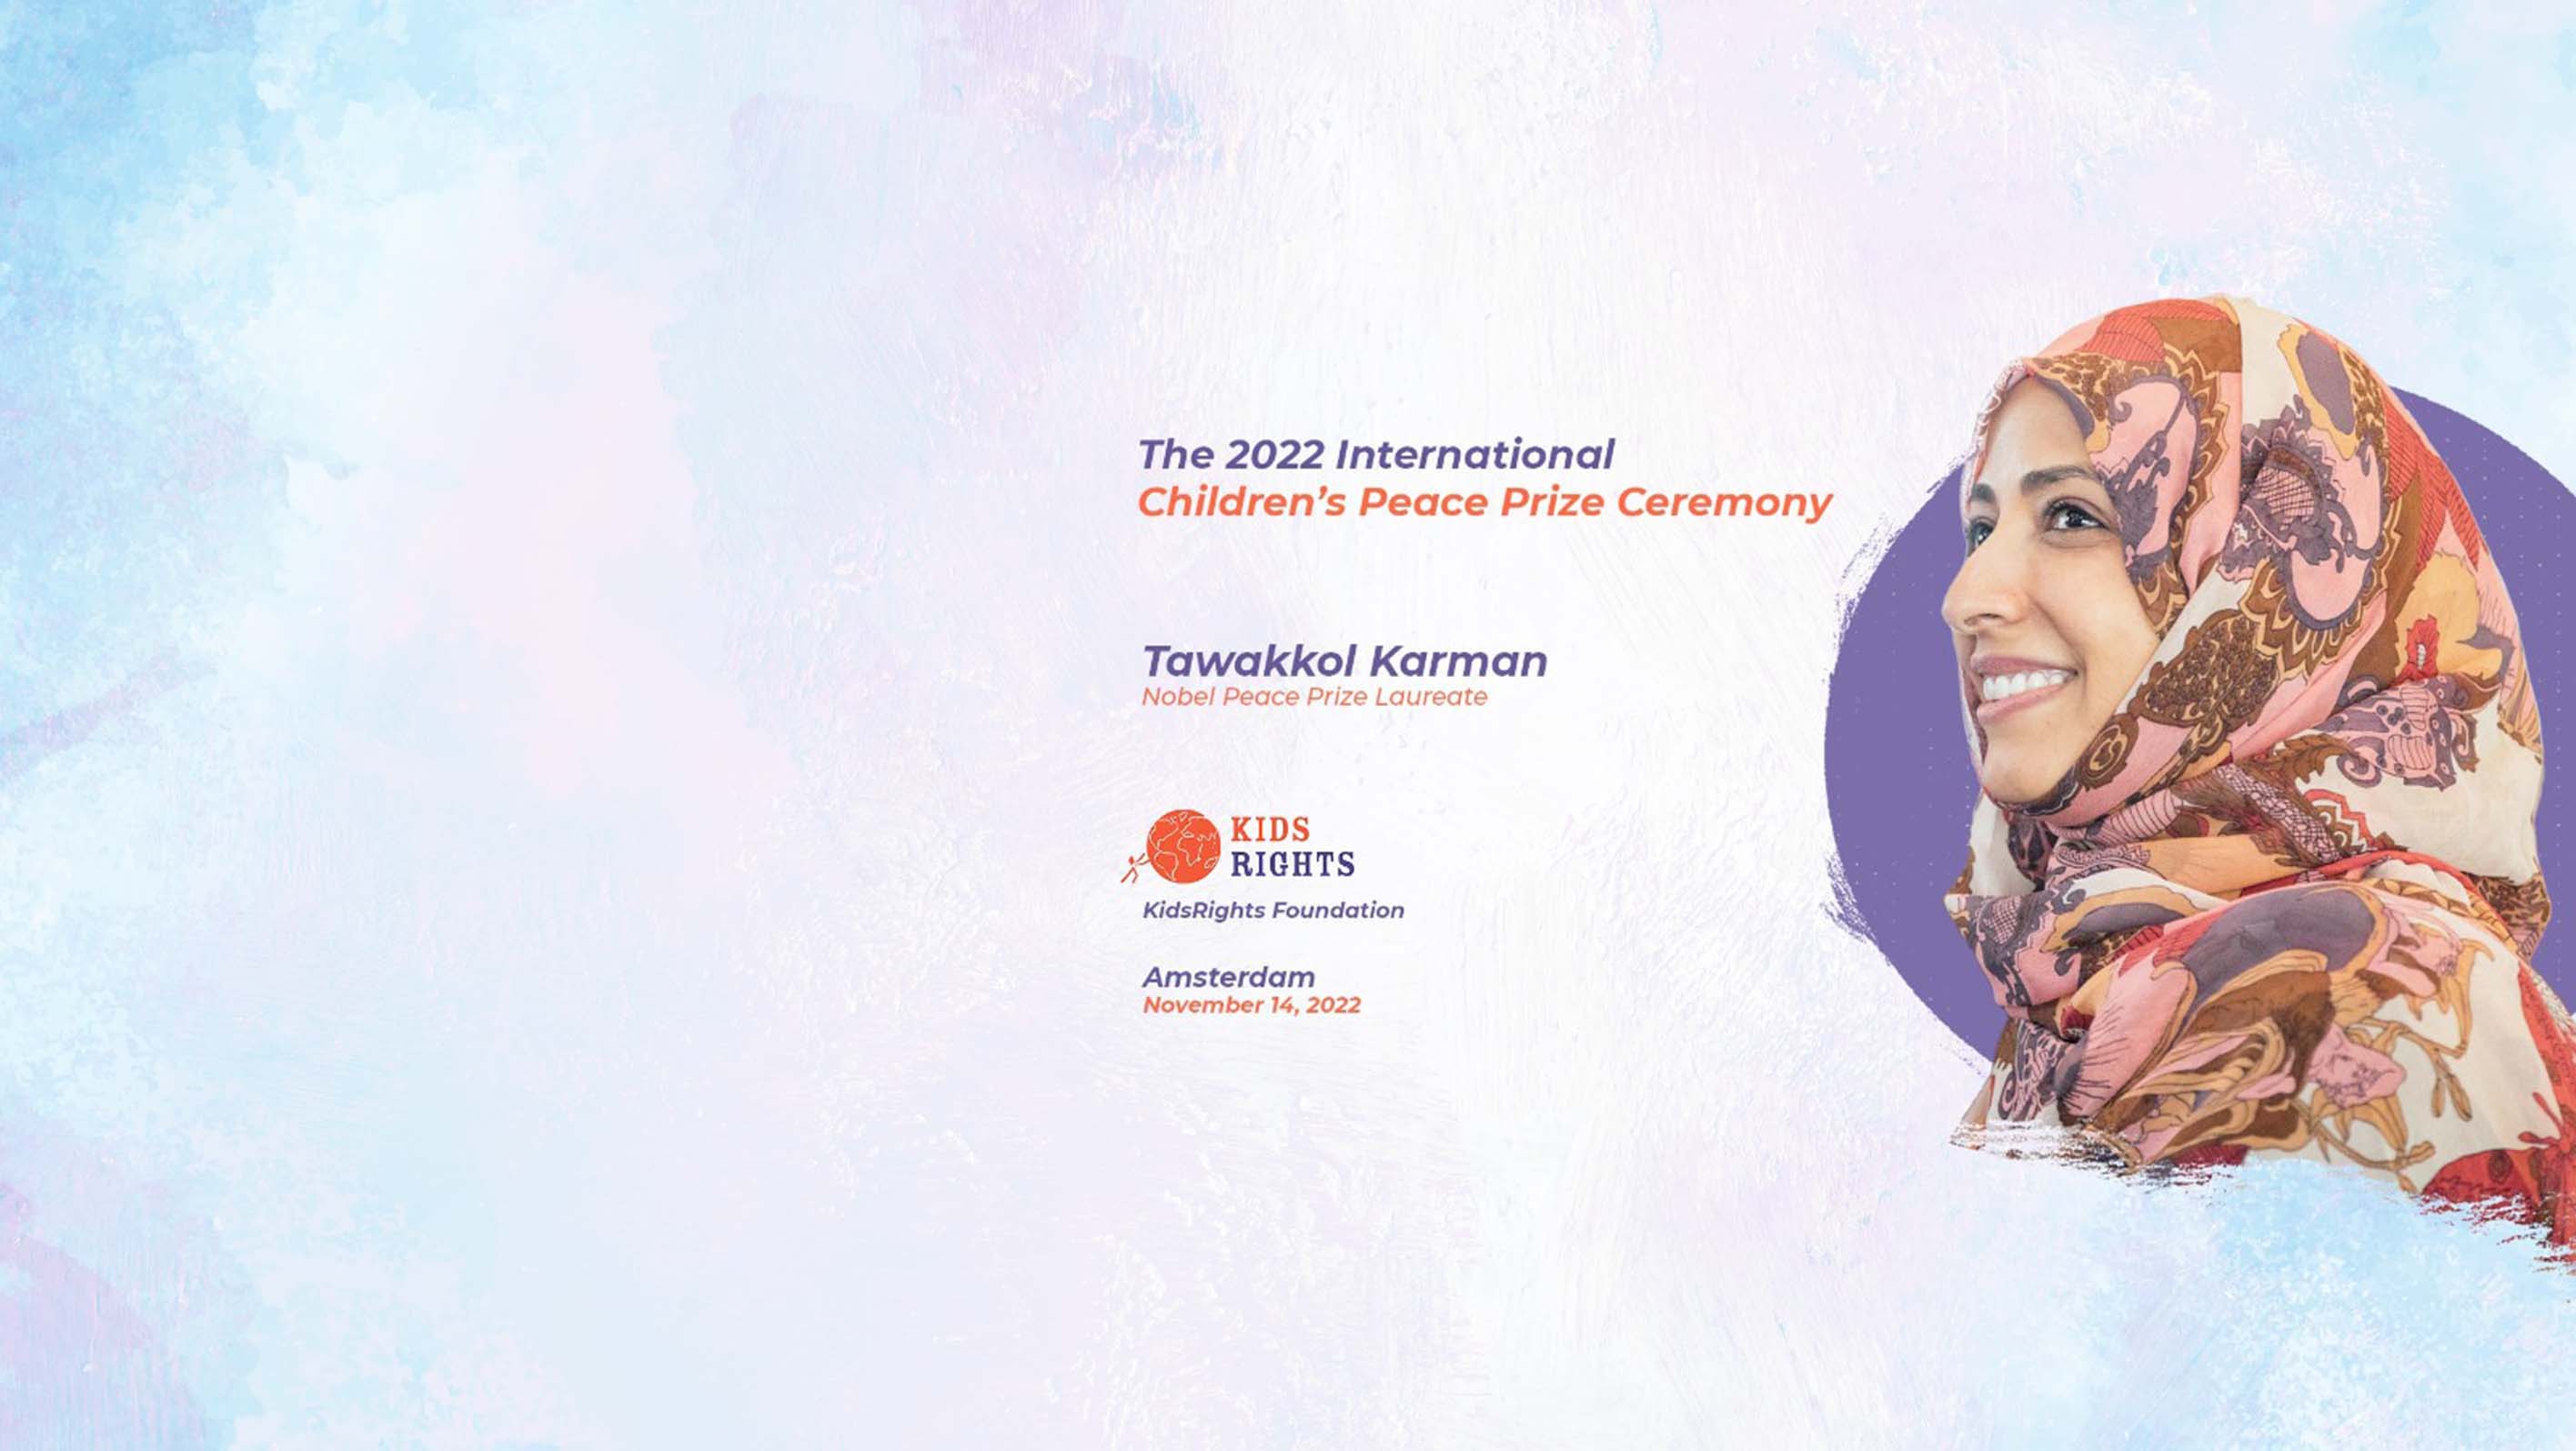 Tawakkol Karman heads to Amsterdam to join 2022 International Children's Peace Prize 